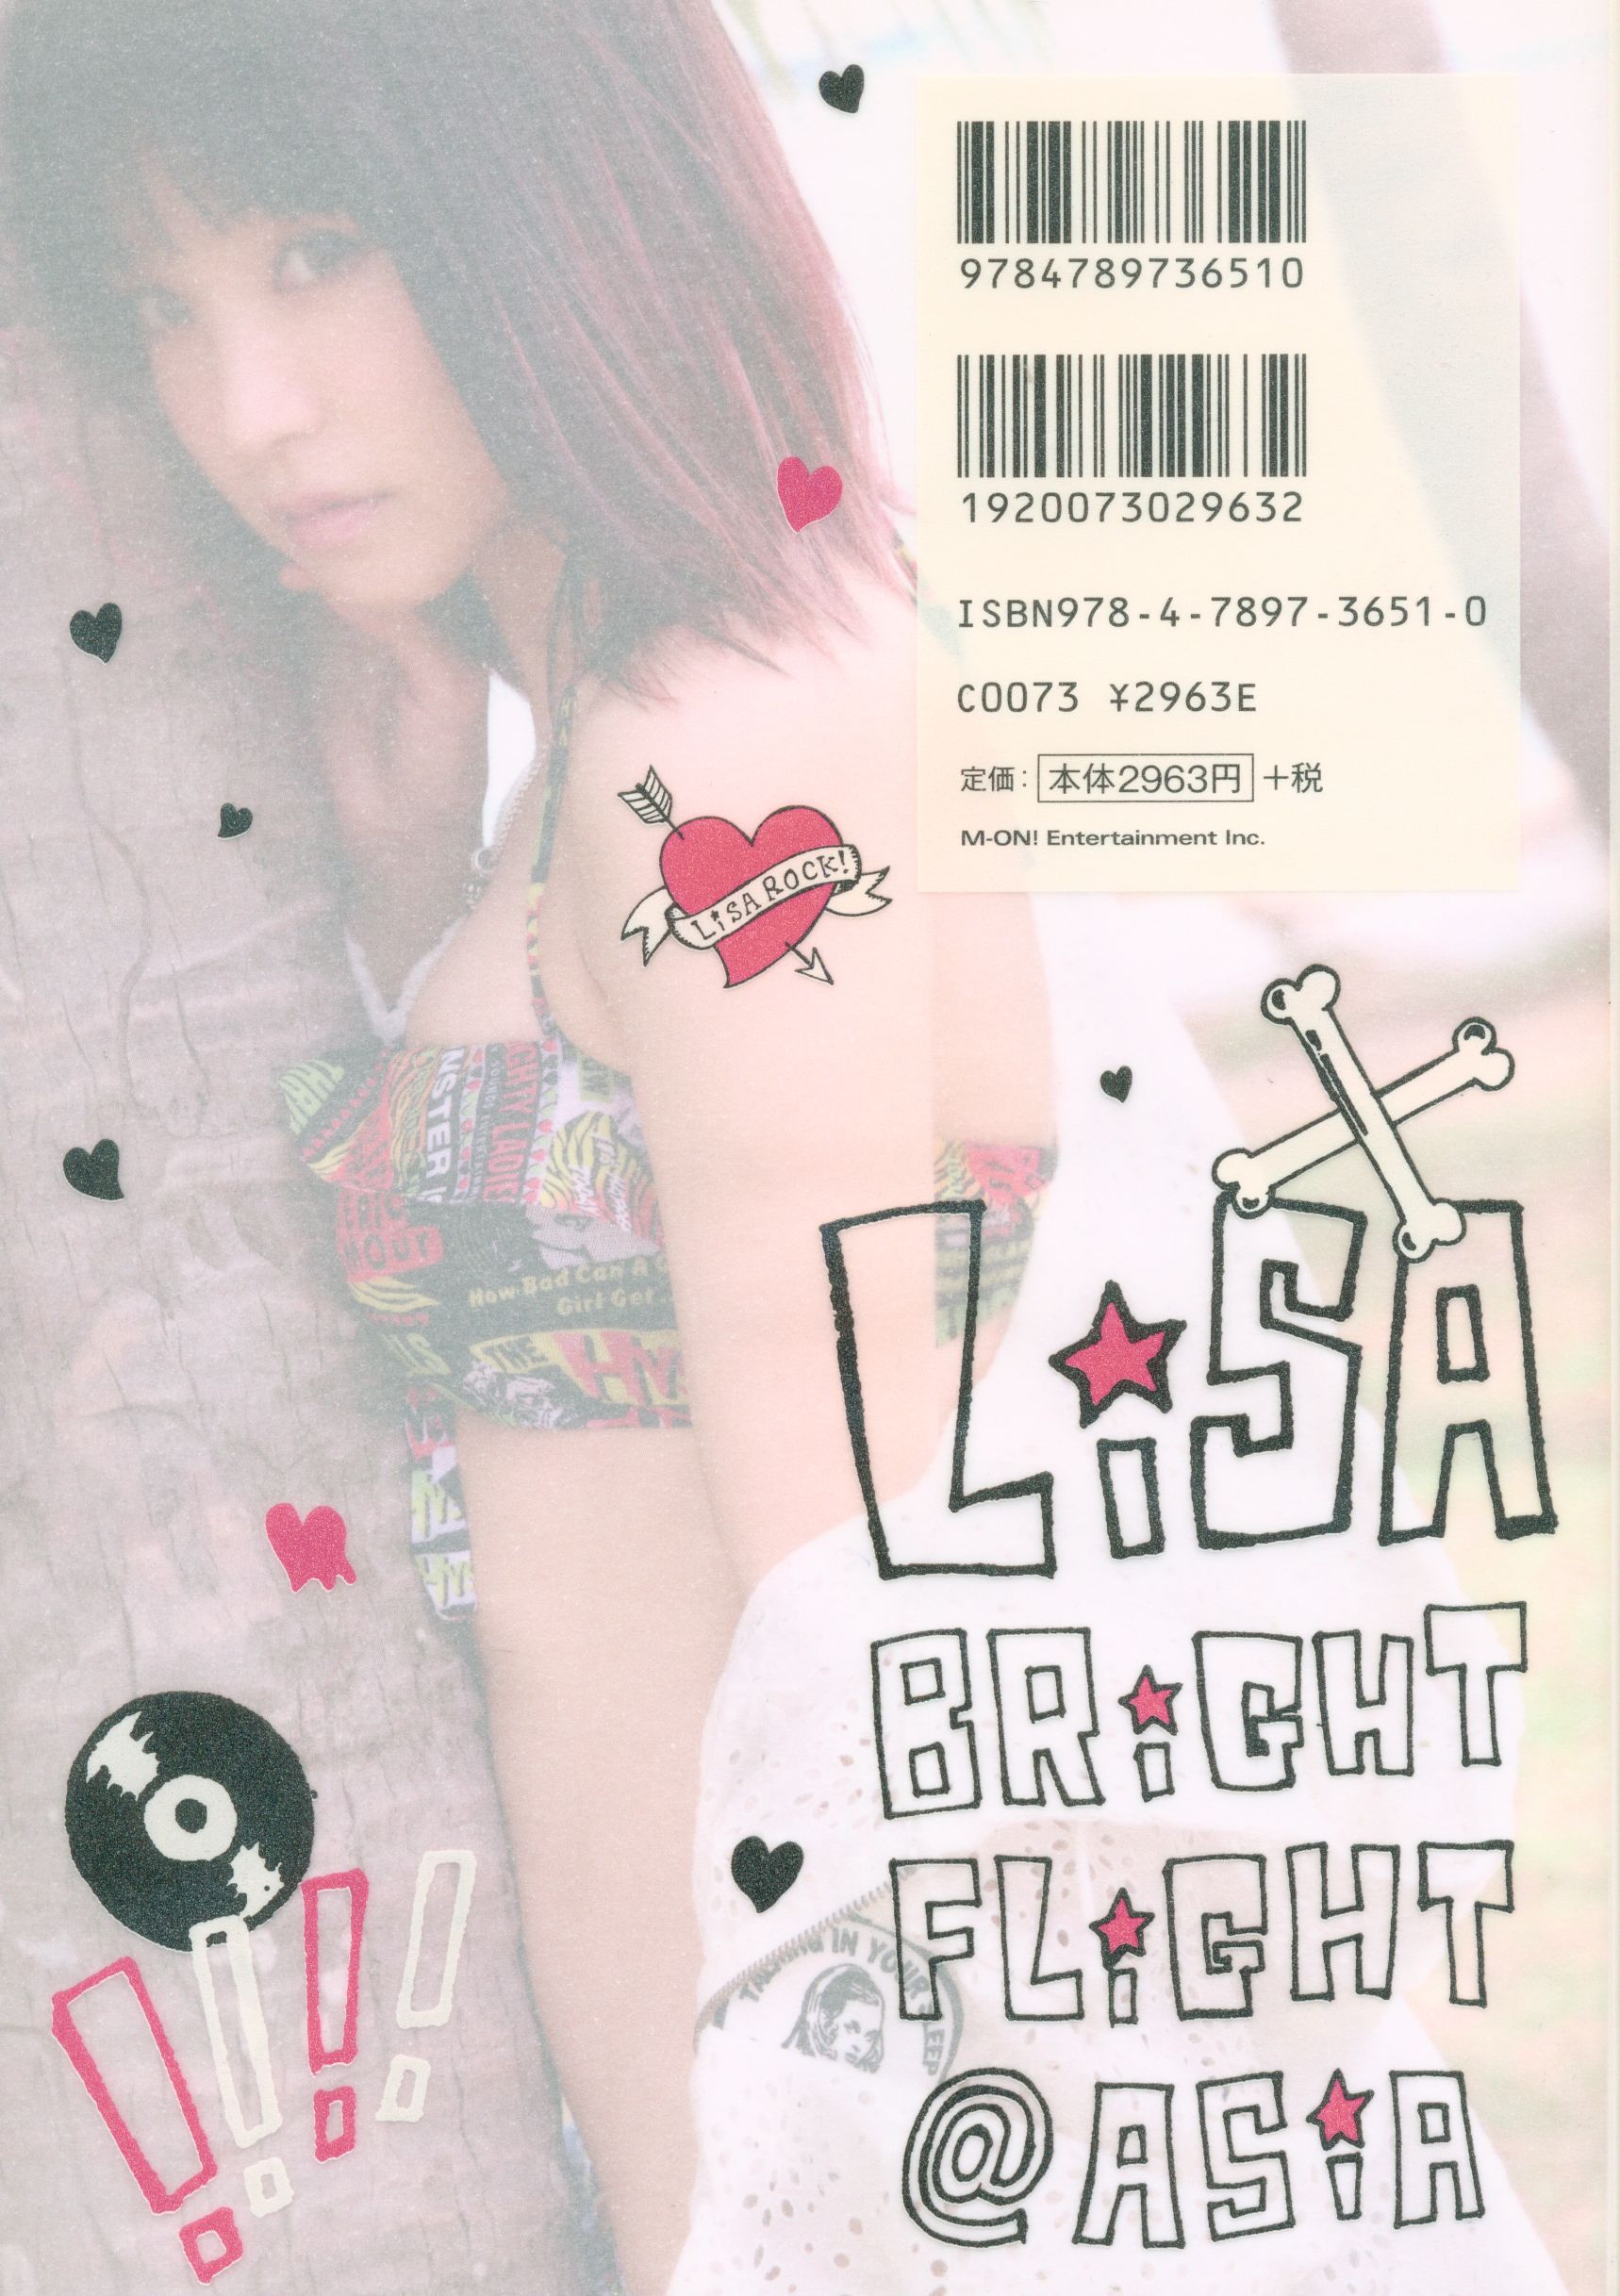 Emuon Entertainment Door Label Photo Book Lisa Bright Flight Asia Mandarake Online Shop